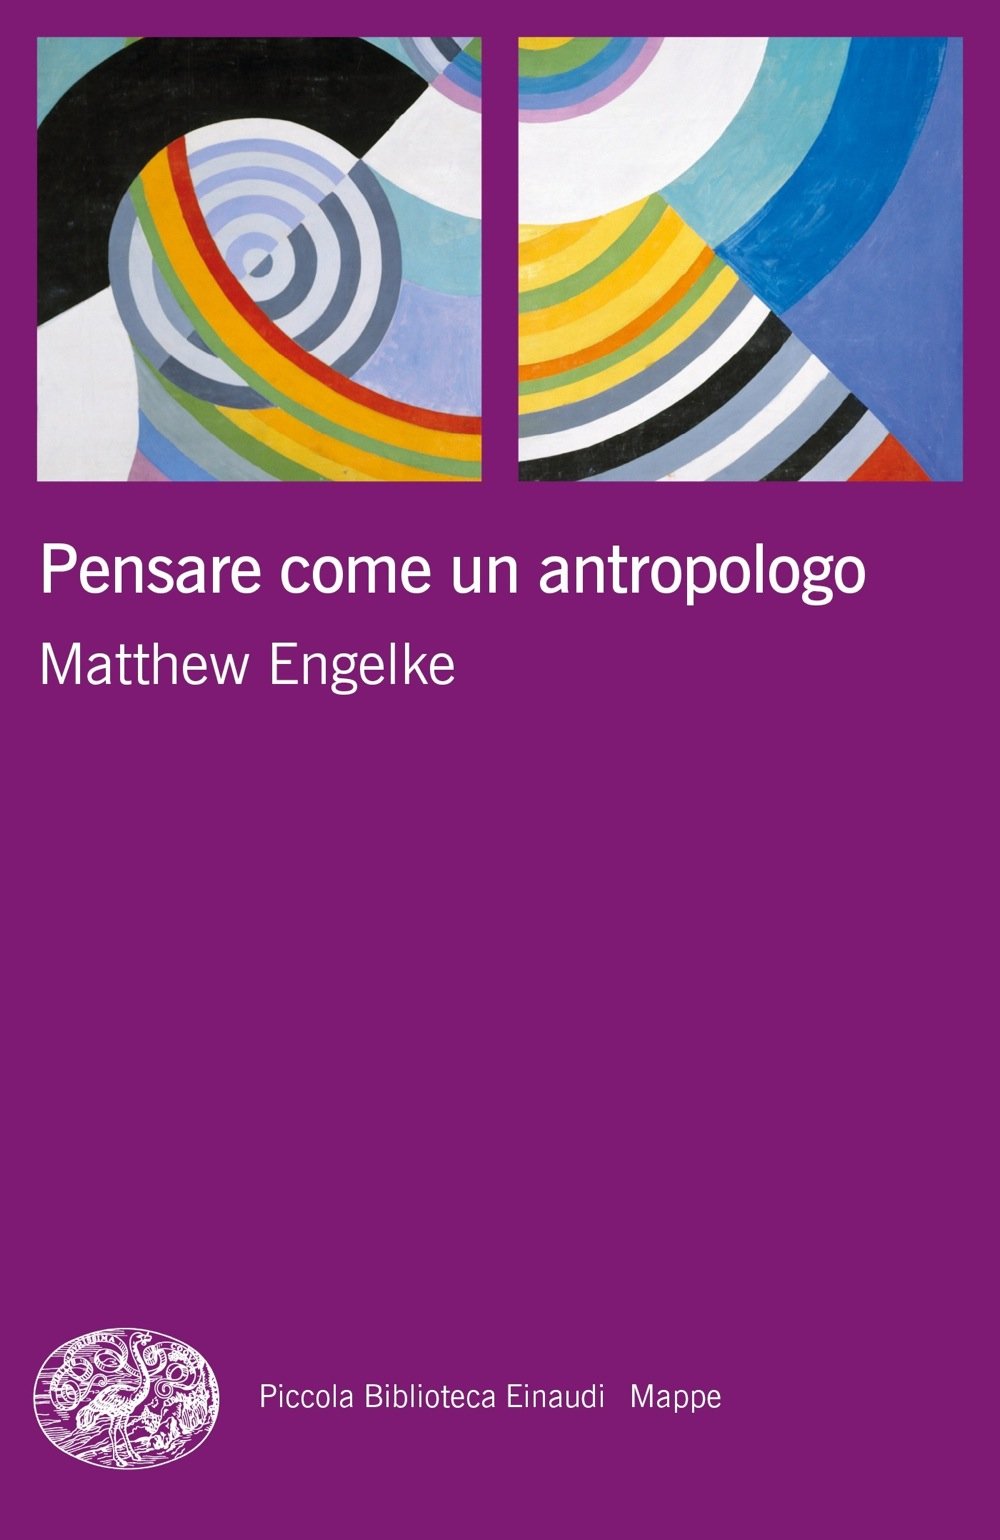 Matthew Engelke: Pensare come un antropologo (Paperback, italiano language, 2018, Einaudi)